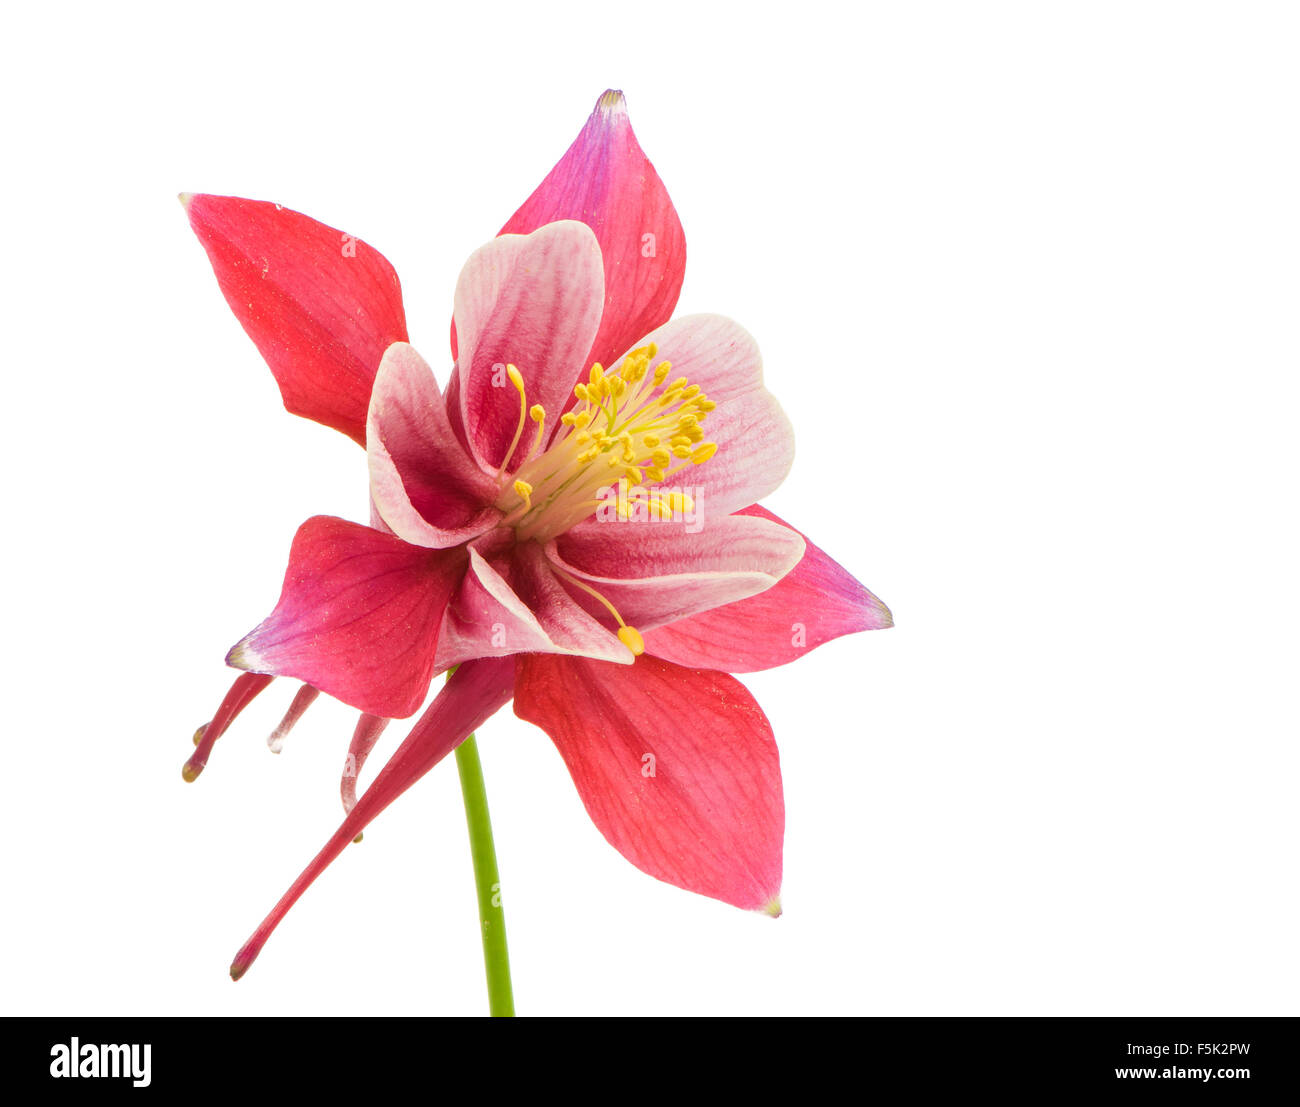 Isolated blossom of Columbine (Aquilegia) flower Stock Photo